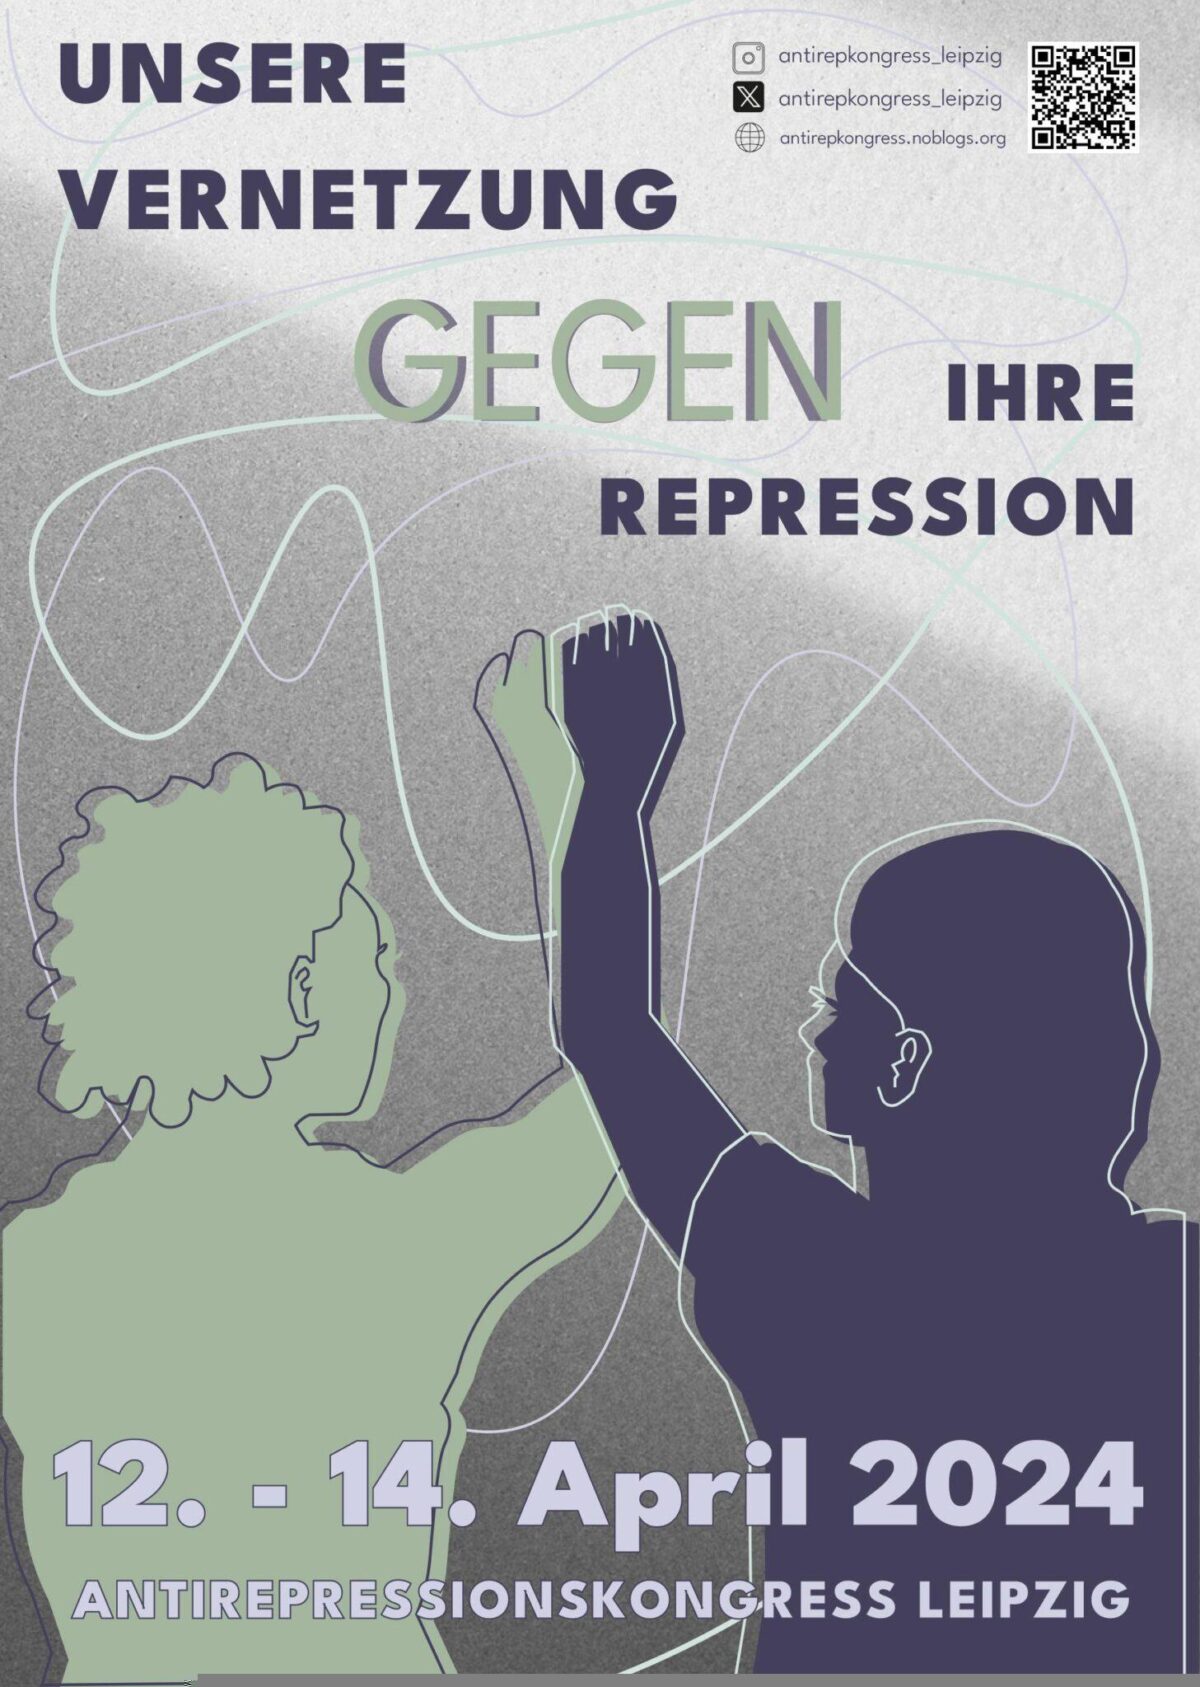 Anti-Repressions-Kongress in Leipzig vom 12. bis 14. April 2024